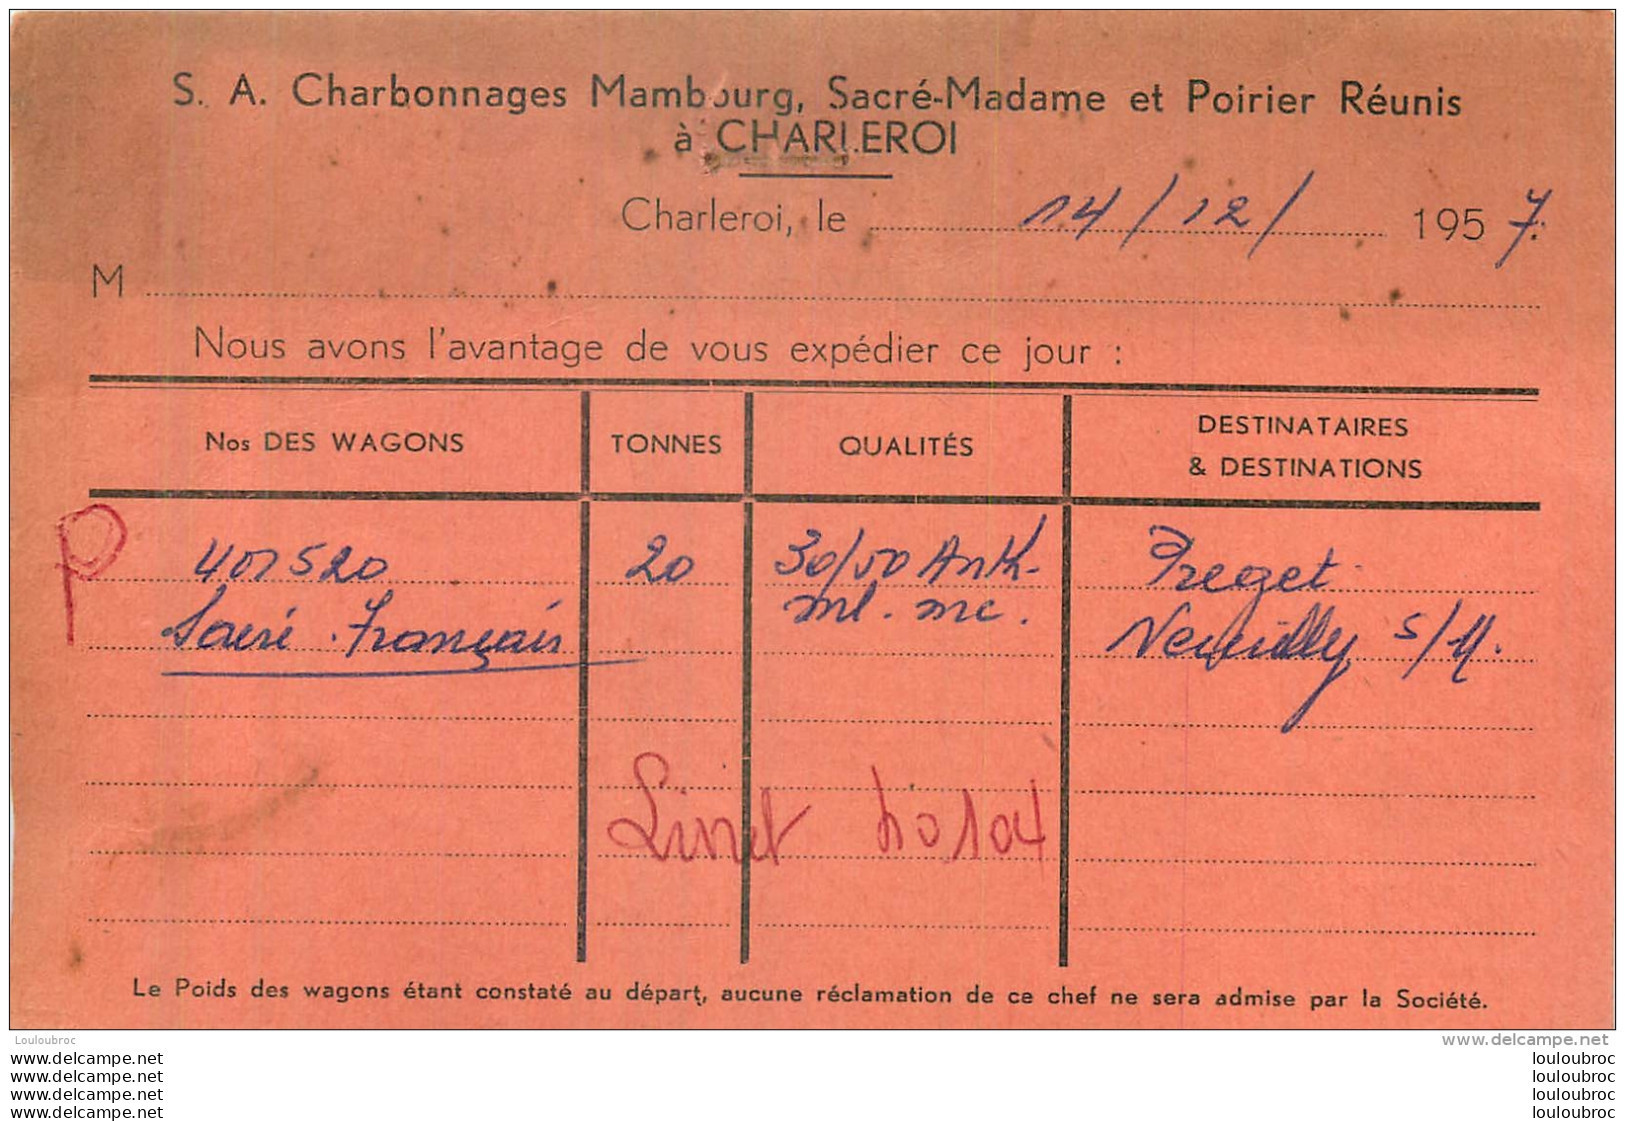 CHARLEROI  SA CHARLEROI MAMBOURG SACRE-MADAME ET POIRIER REUNIS 1957 CARTE EXPEDITION - Charleroi